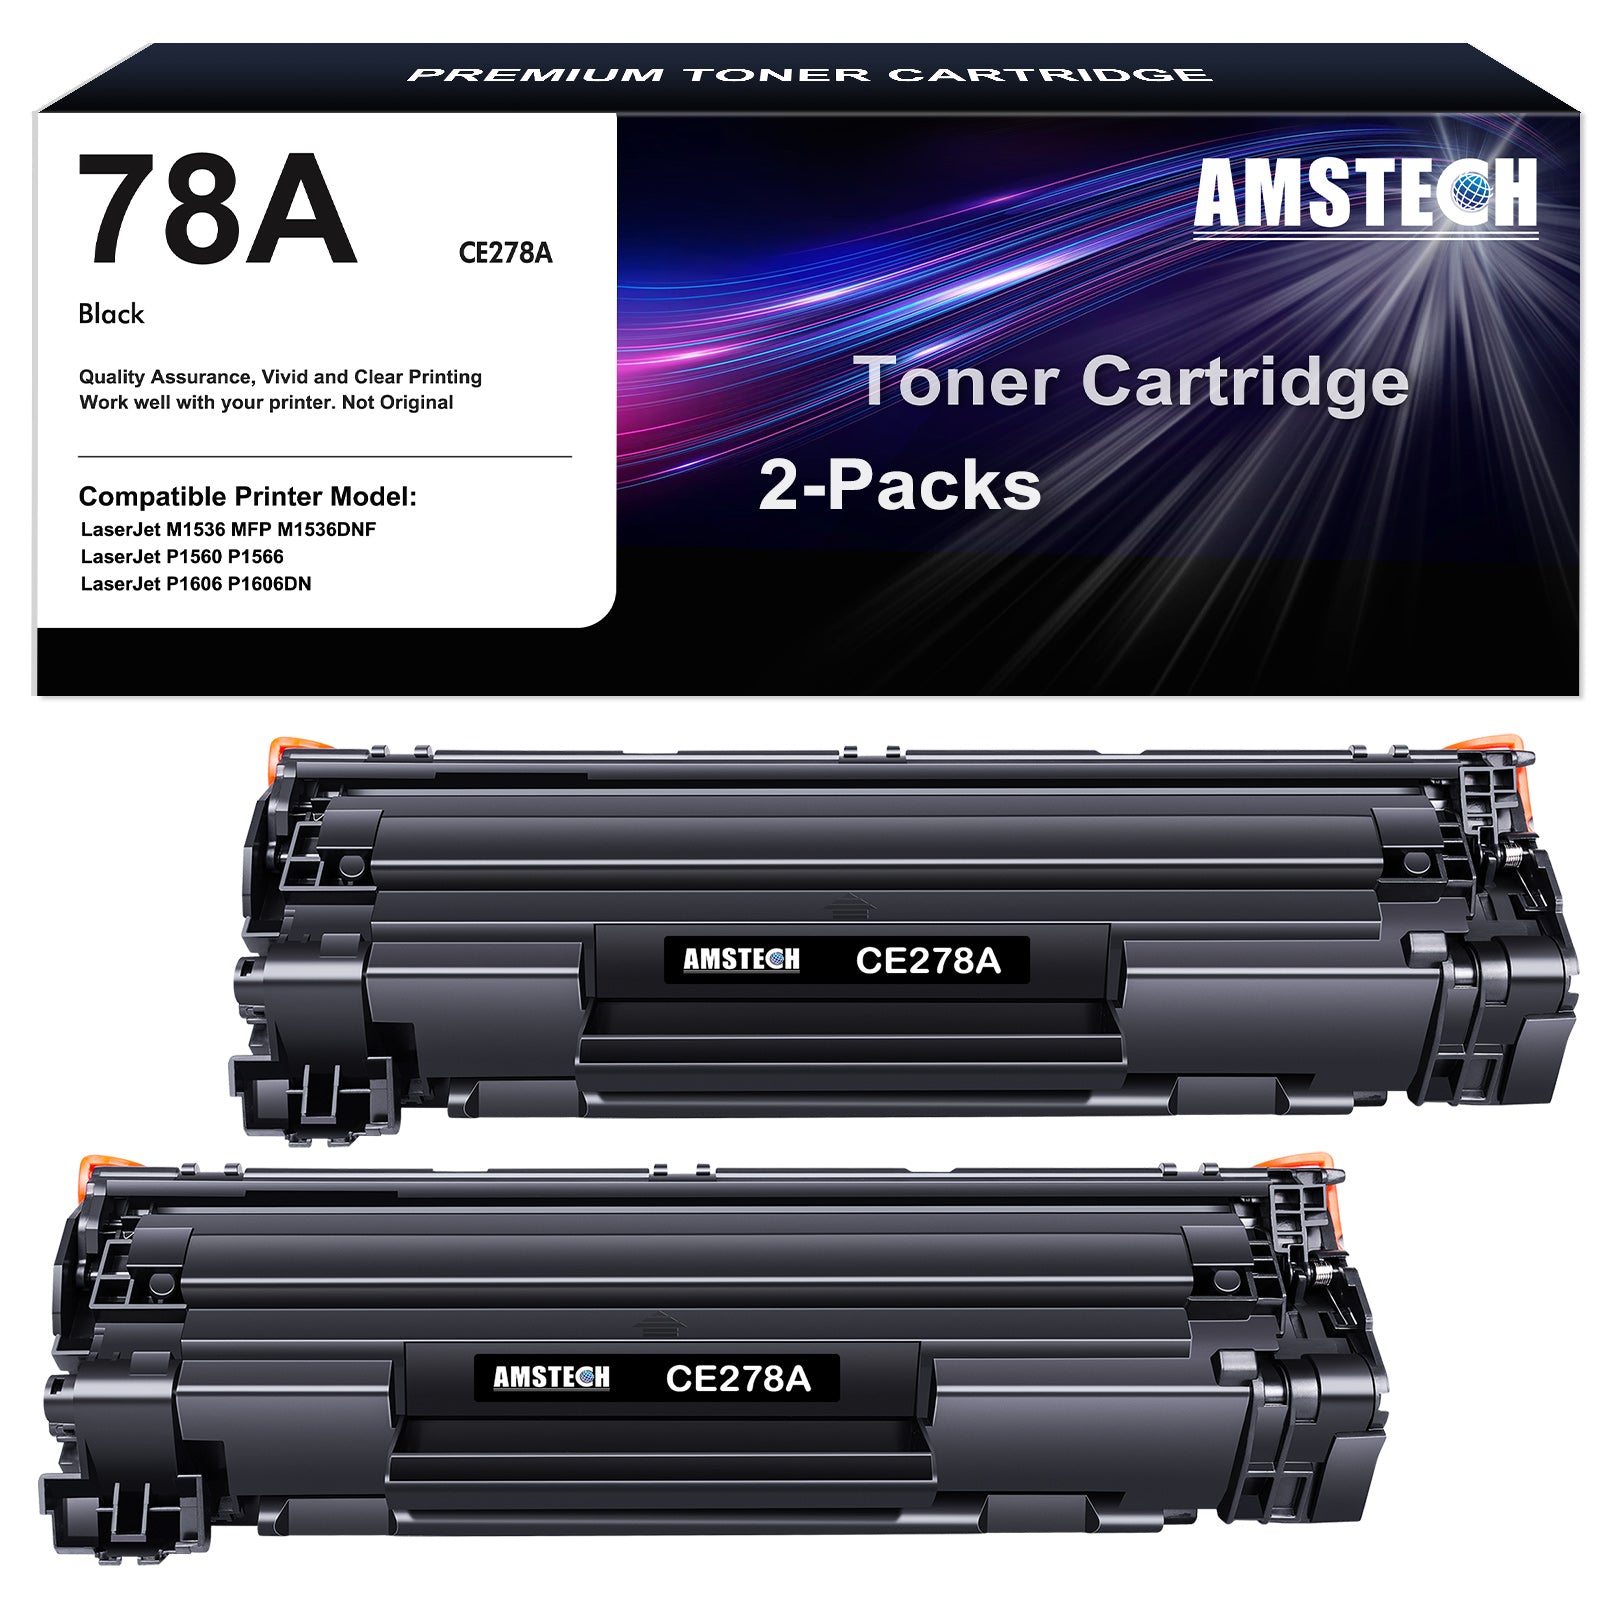 78A CE278A Black Ink Toner Cartridges for HP 78A Laserjet MFP HP LaserJet M1536 MFP M1536DNF P1560 P1566 P1606 P1606DN Printer compatible with 1606dn toner cartridge (CE278AD | Black, 2-Pack)